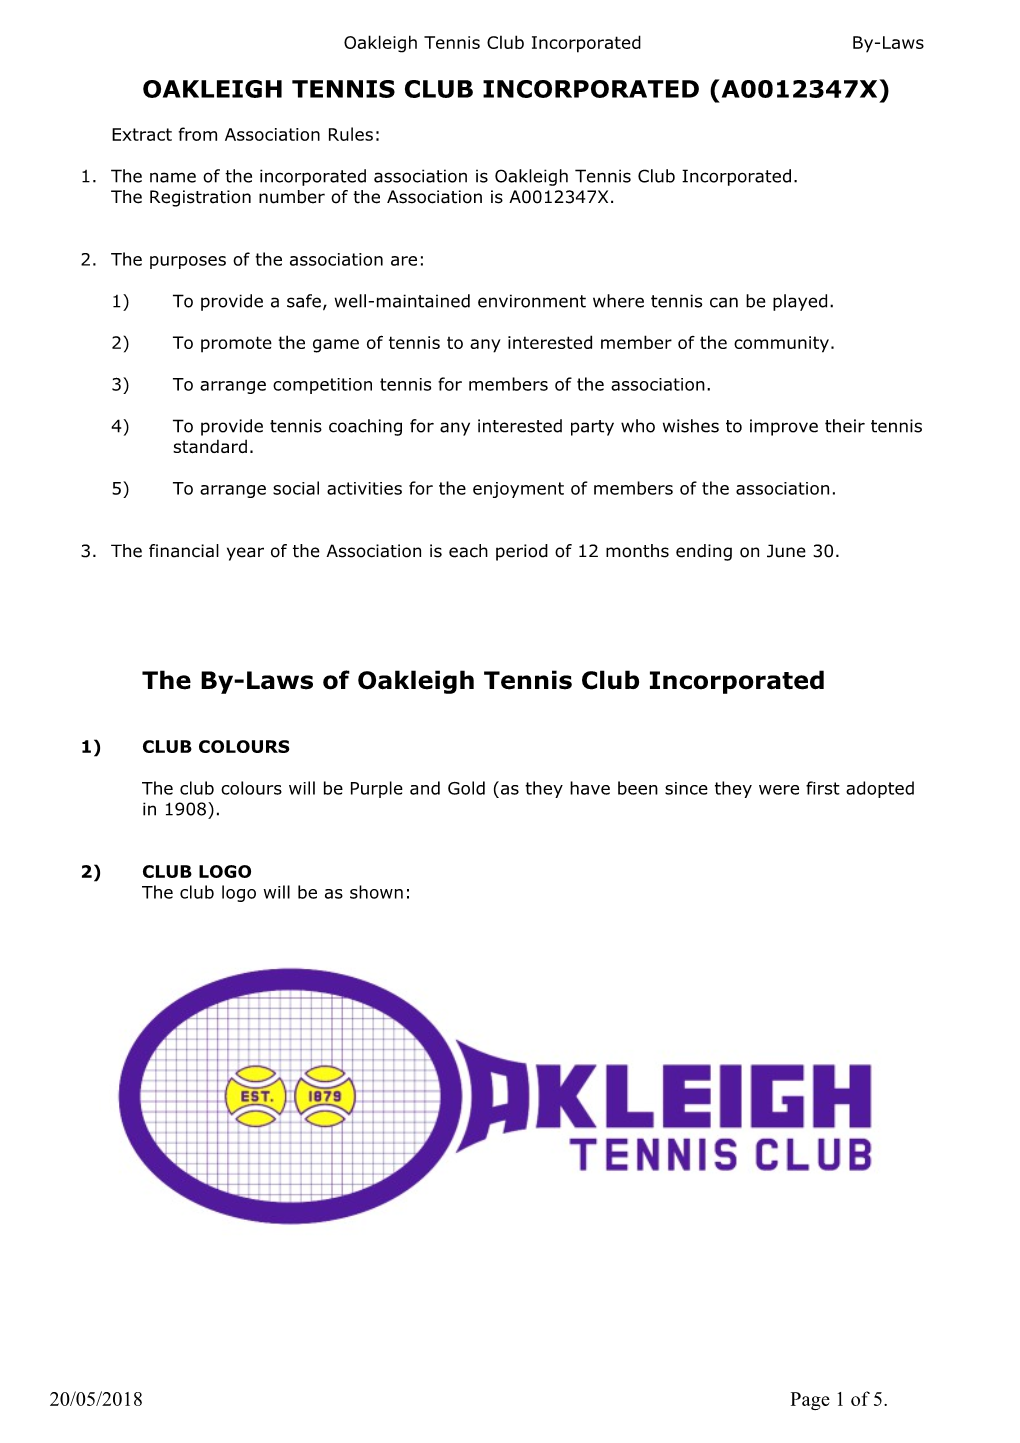 Oakleigh Tennis Club Incorporated (A0012347x)